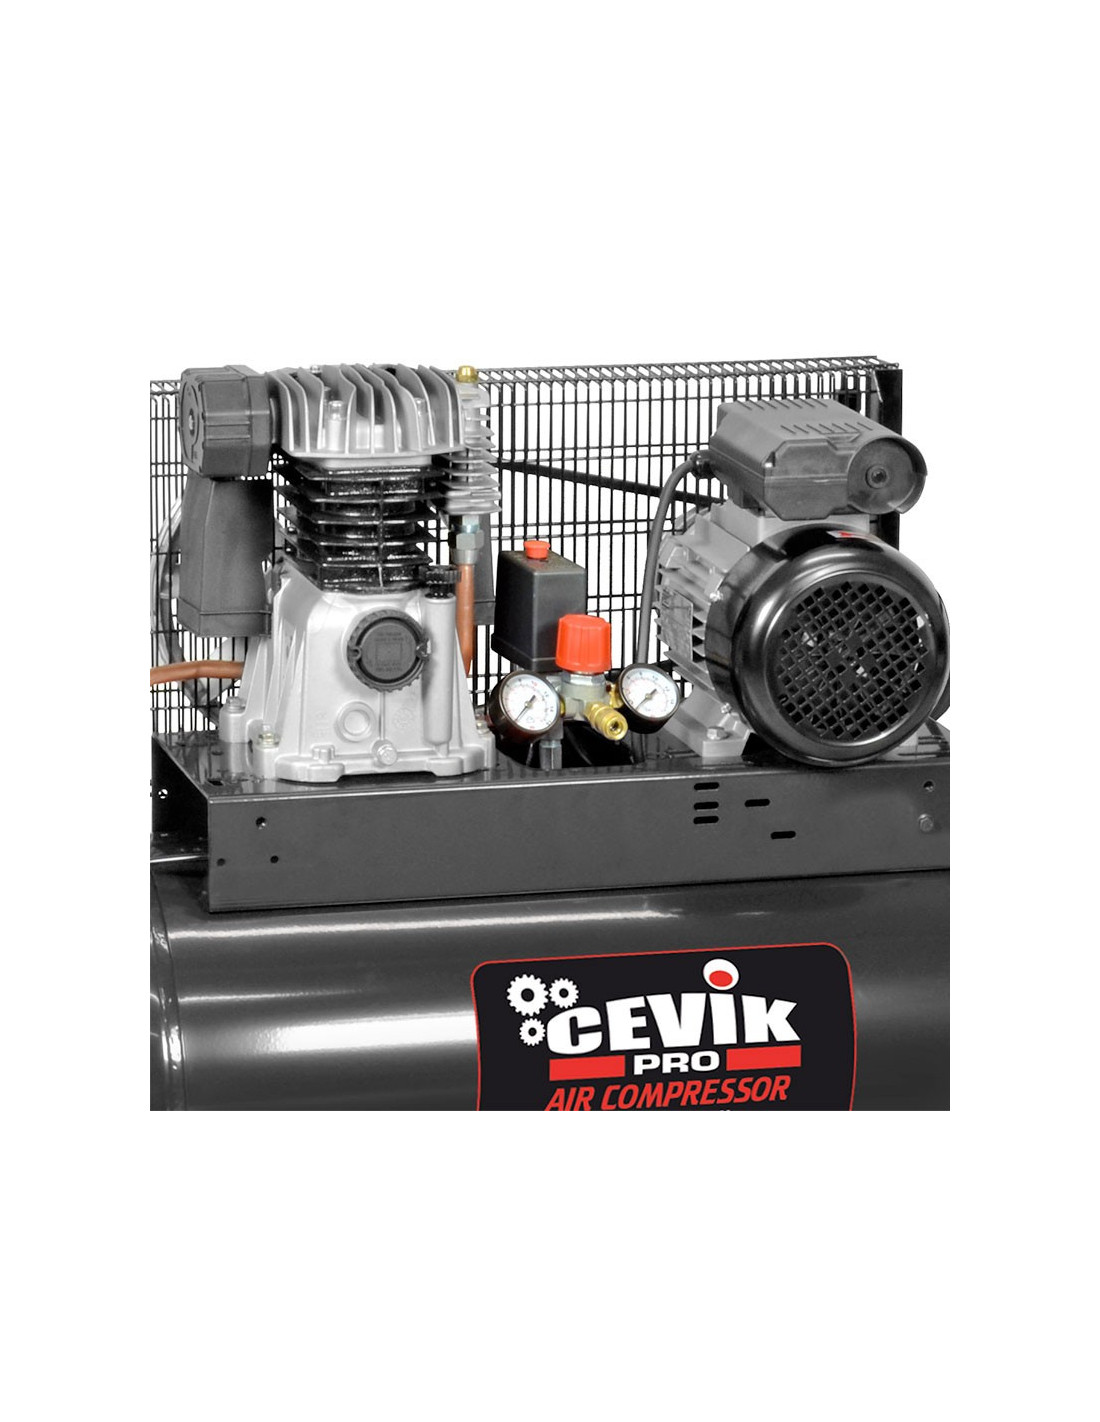 Compresor Cevik AB100/3M 100 litros - Suministros Urquiza